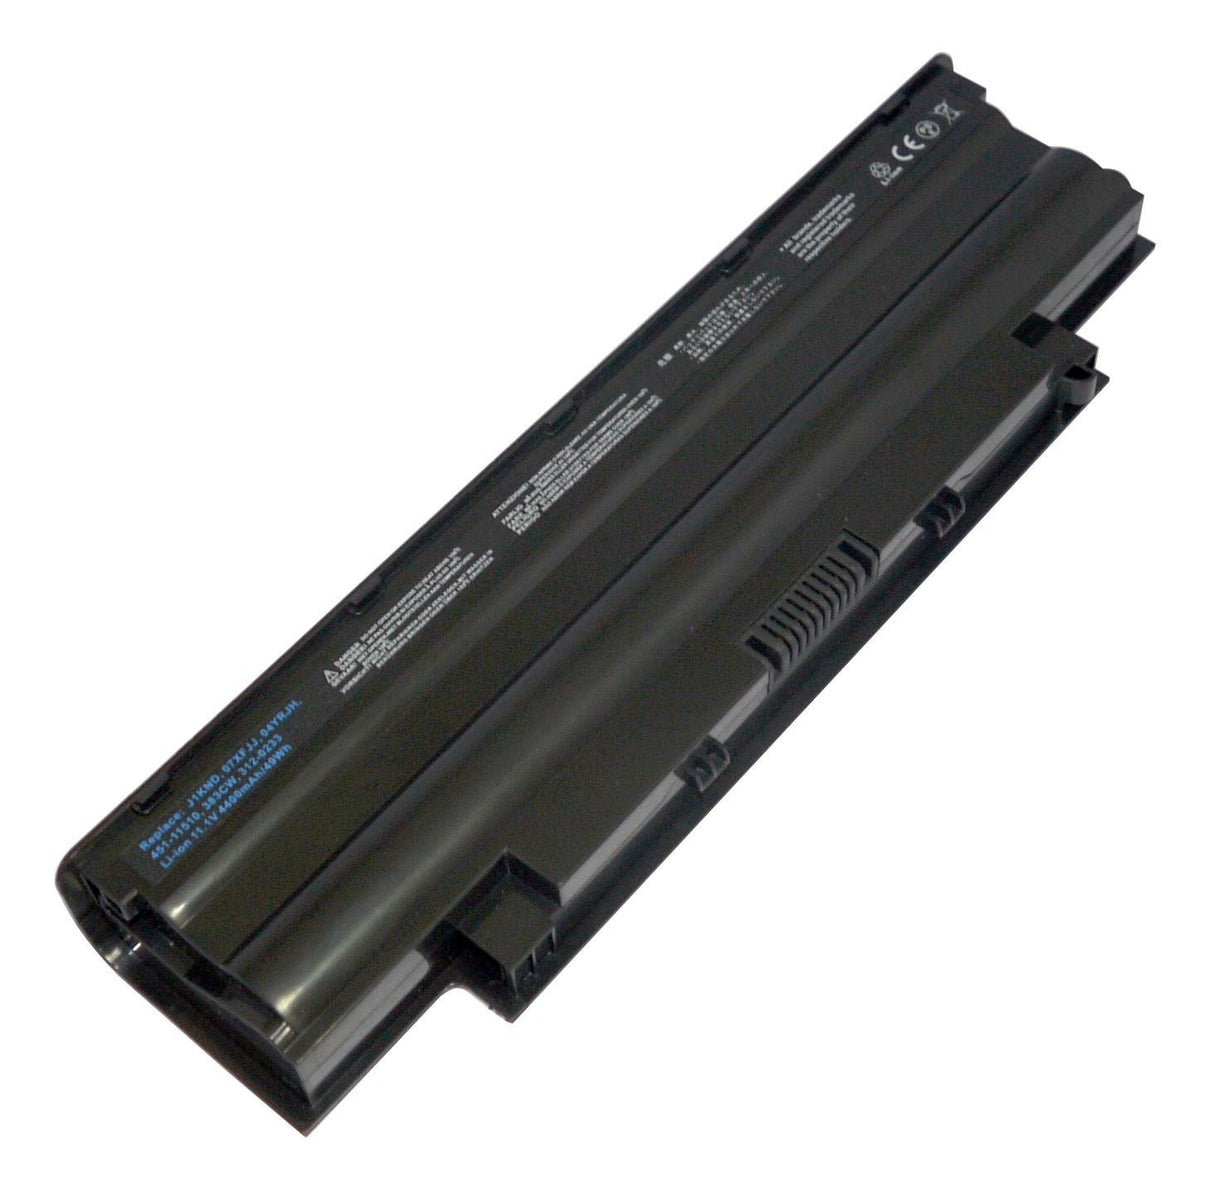 Bateria Compatível para Dell Inspiron 13R 14R 15R 17R 04YRJH 06P6PN 312-0233 4400mAh - Multi4you®